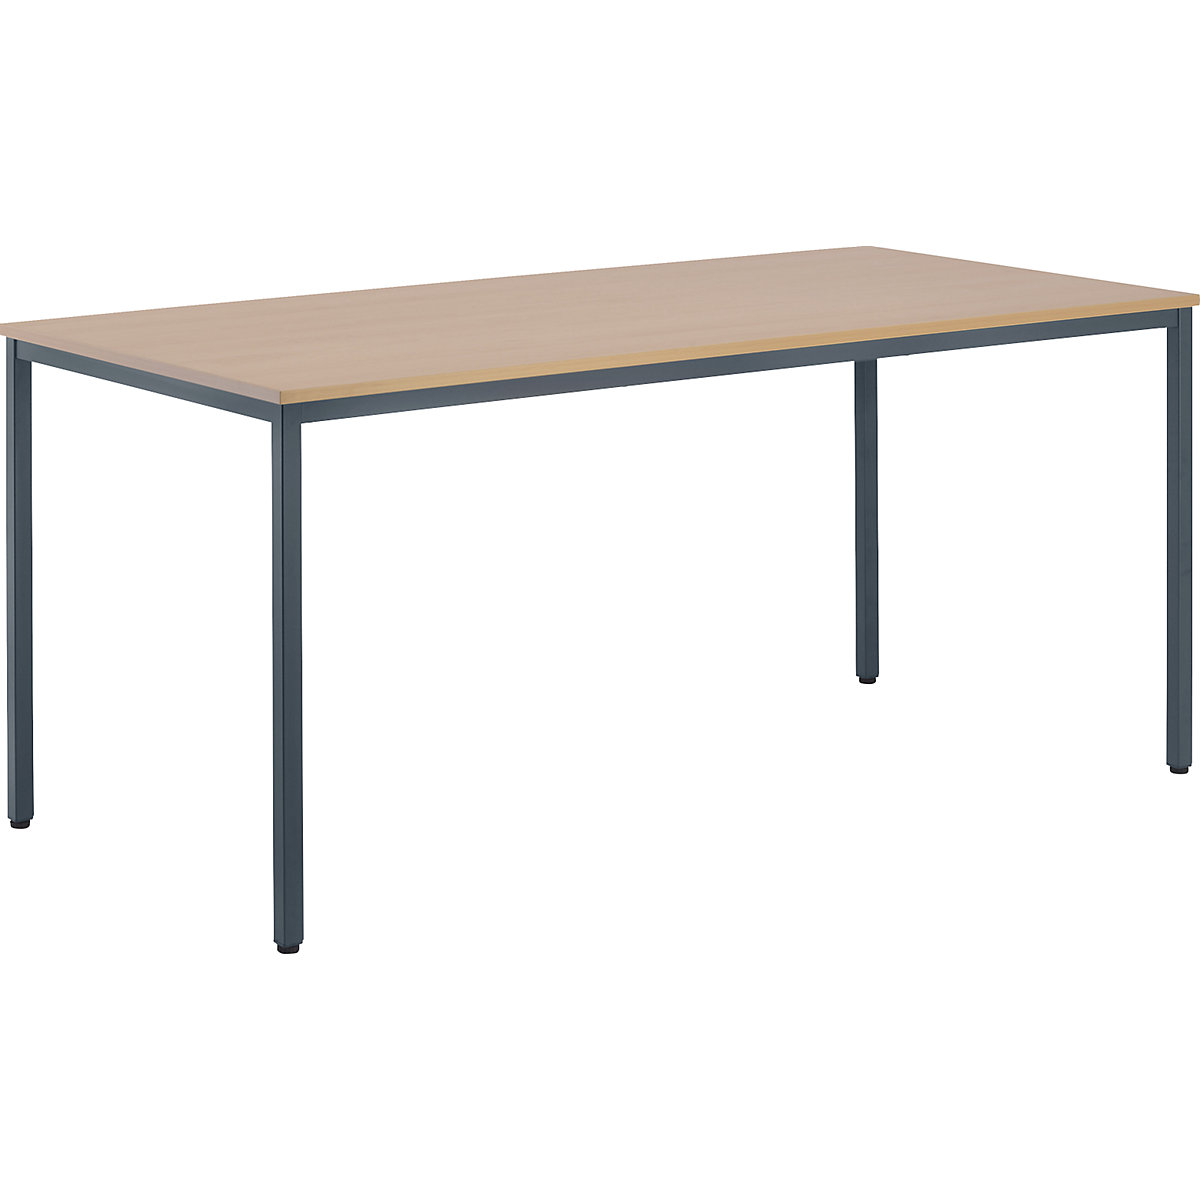 Multifunctionele tafel – eurokraft basic, h x b x d = 720 x 1600 x 800 mm, blad beukenhoutdecor, frame basaltgrijs